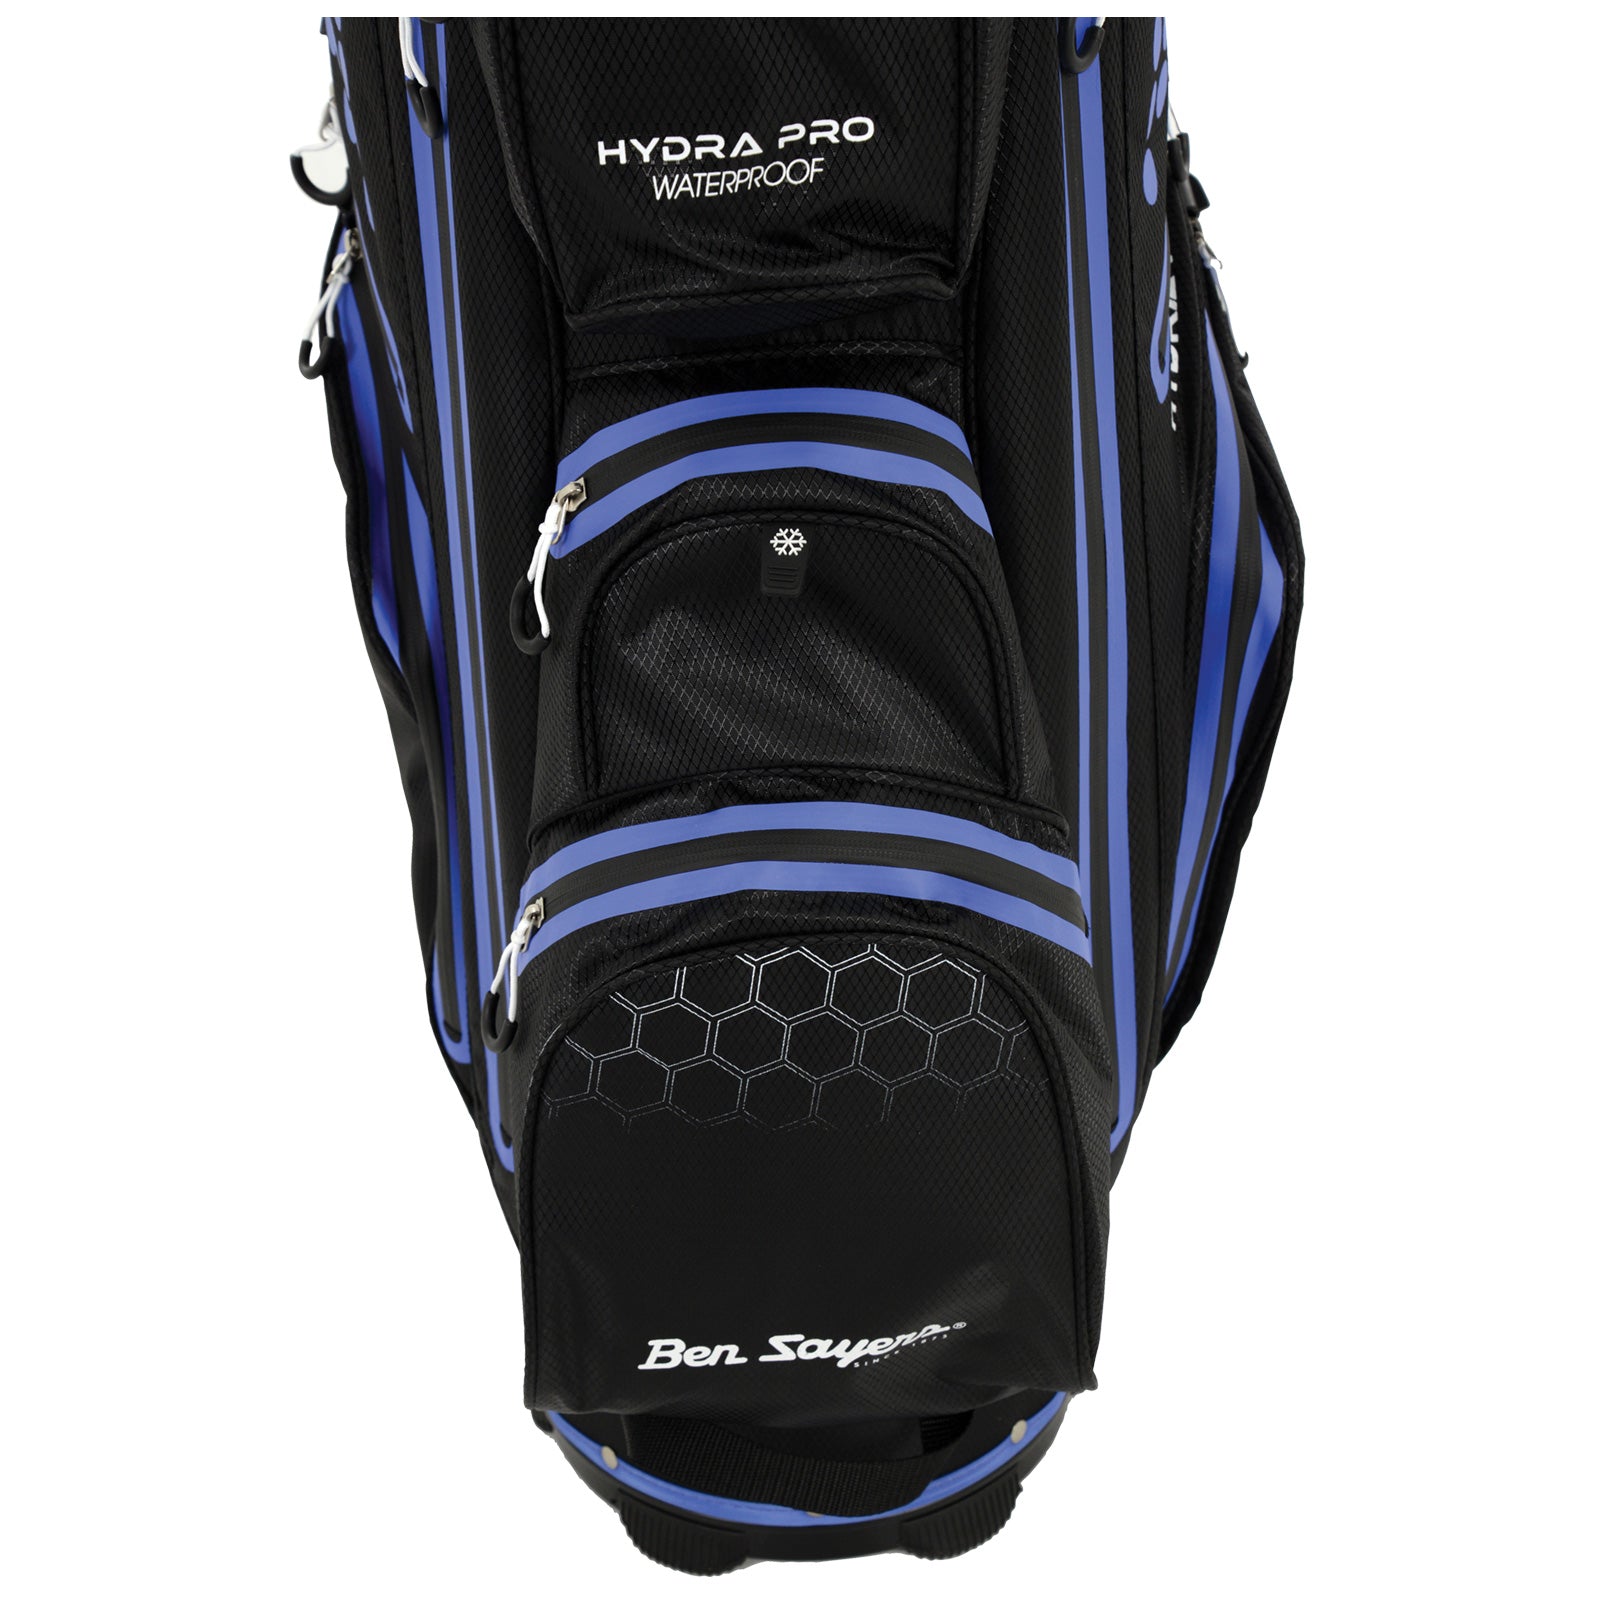 Ben Sayers Hydra Pro Waterproof Cart Bag